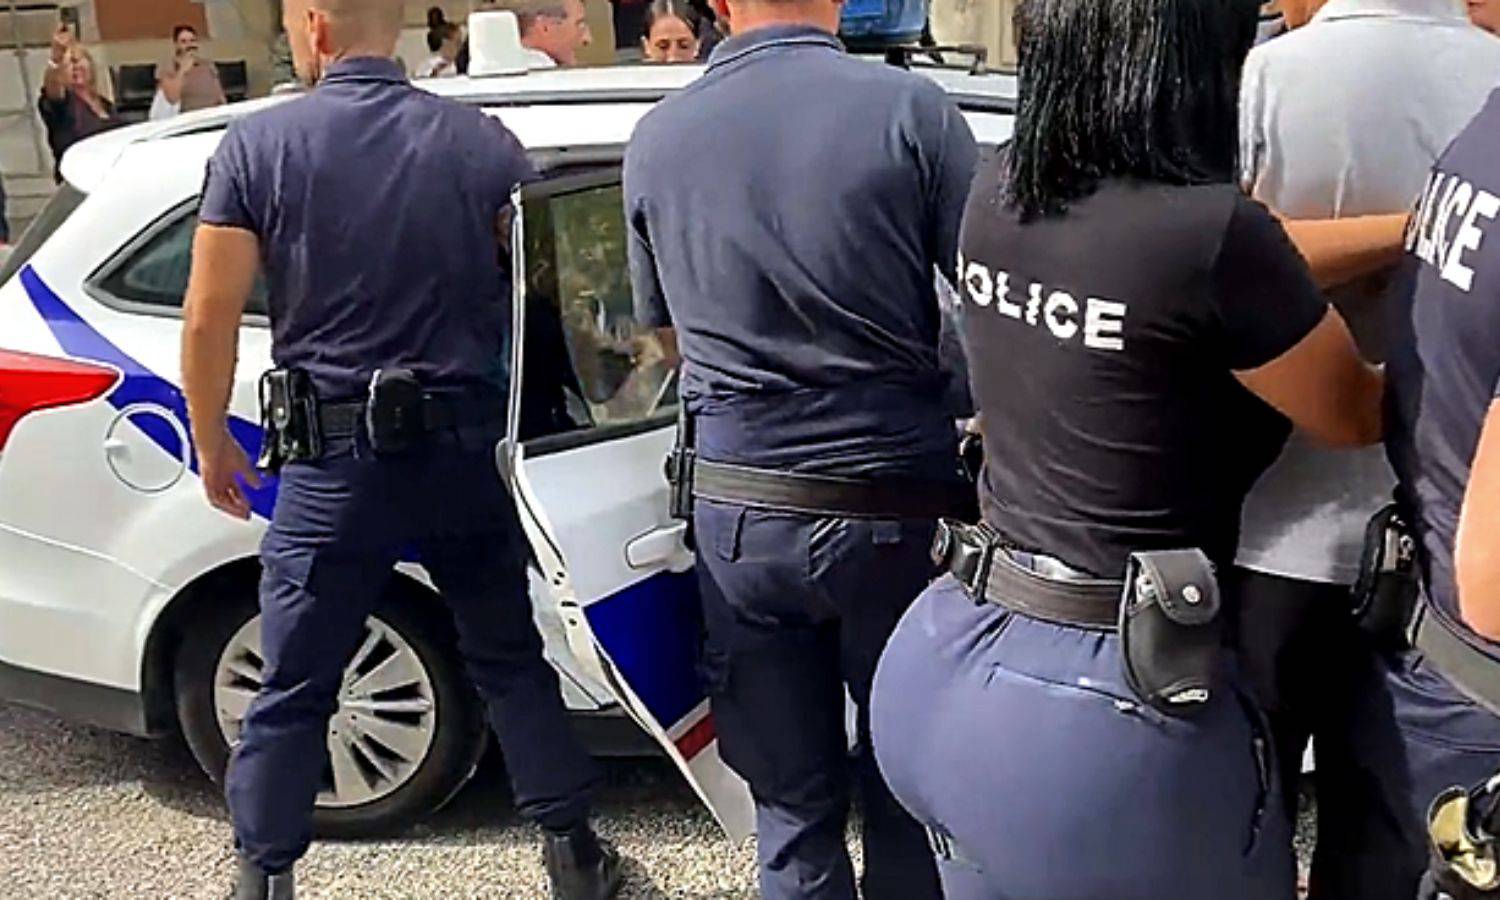 Francuska policajka otključala profil na Instagramu: U tek par sati dobila je 10.000 pratitelja